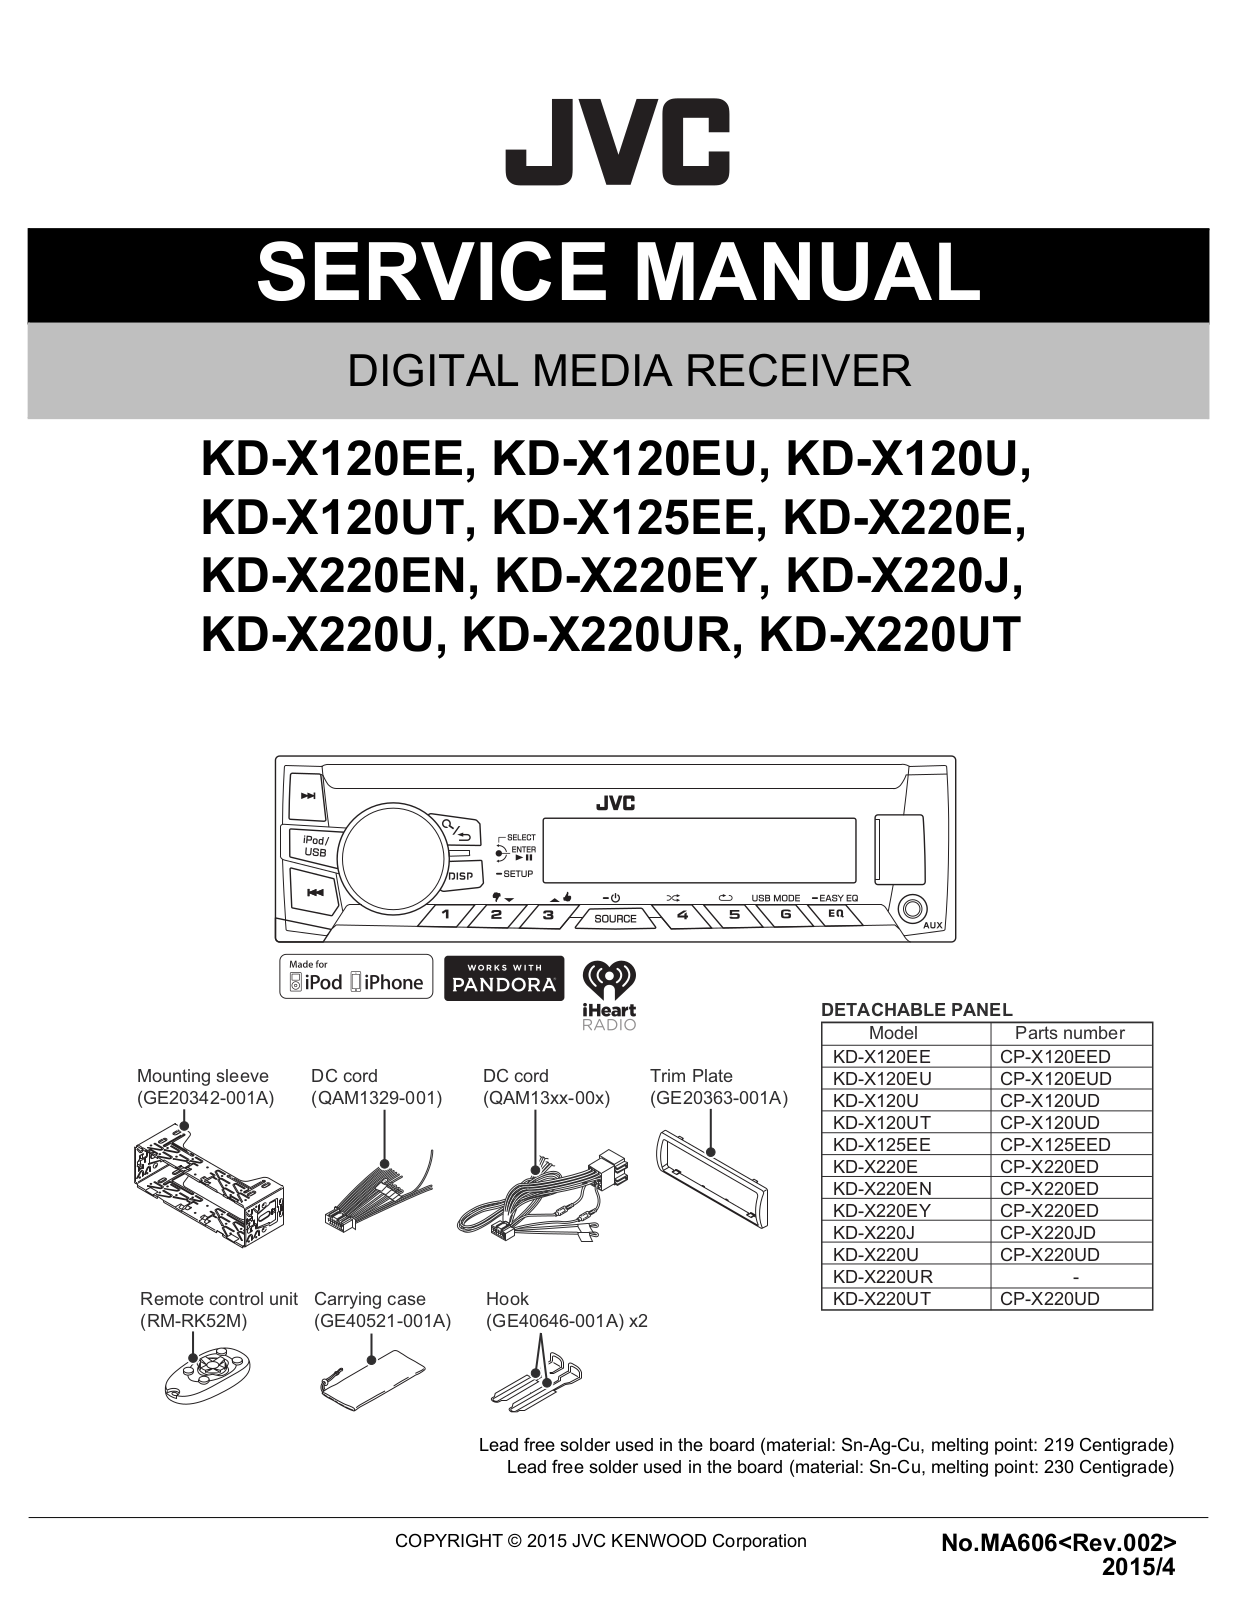 Jvc KD-X220-UT, KD-X220-UR, KD-X220-U, KD-X220-J, KD-X220-EY Service Manual